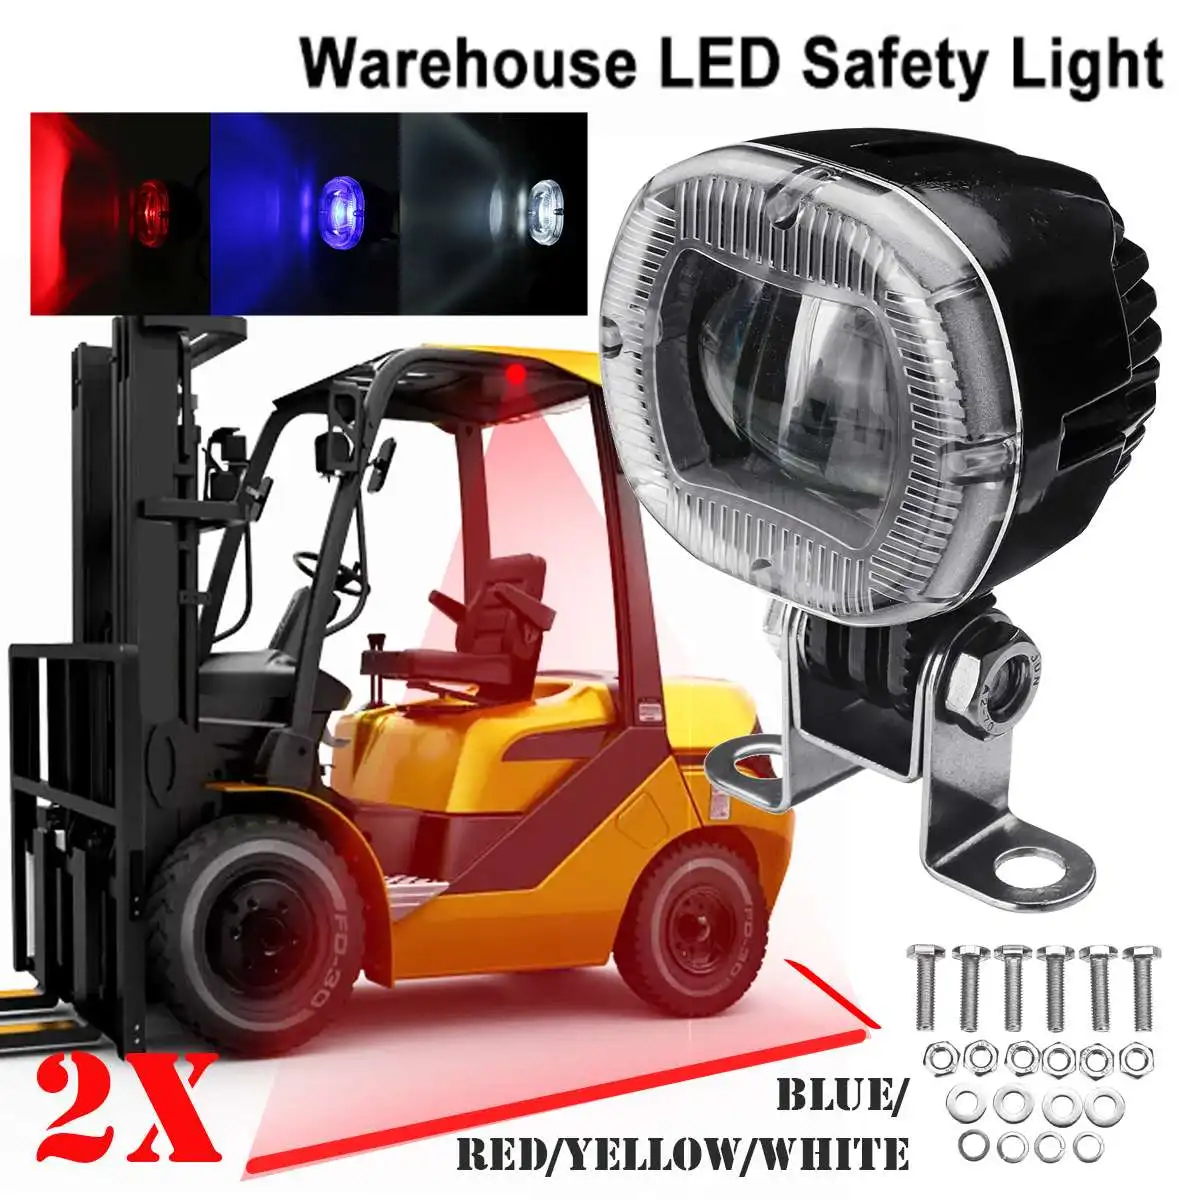 

2pcs 20W LED Forklift Trailer Warning Lights Safety Work Spot Signal Light 180° Adjustable Universal Inspection Clearance Lamp